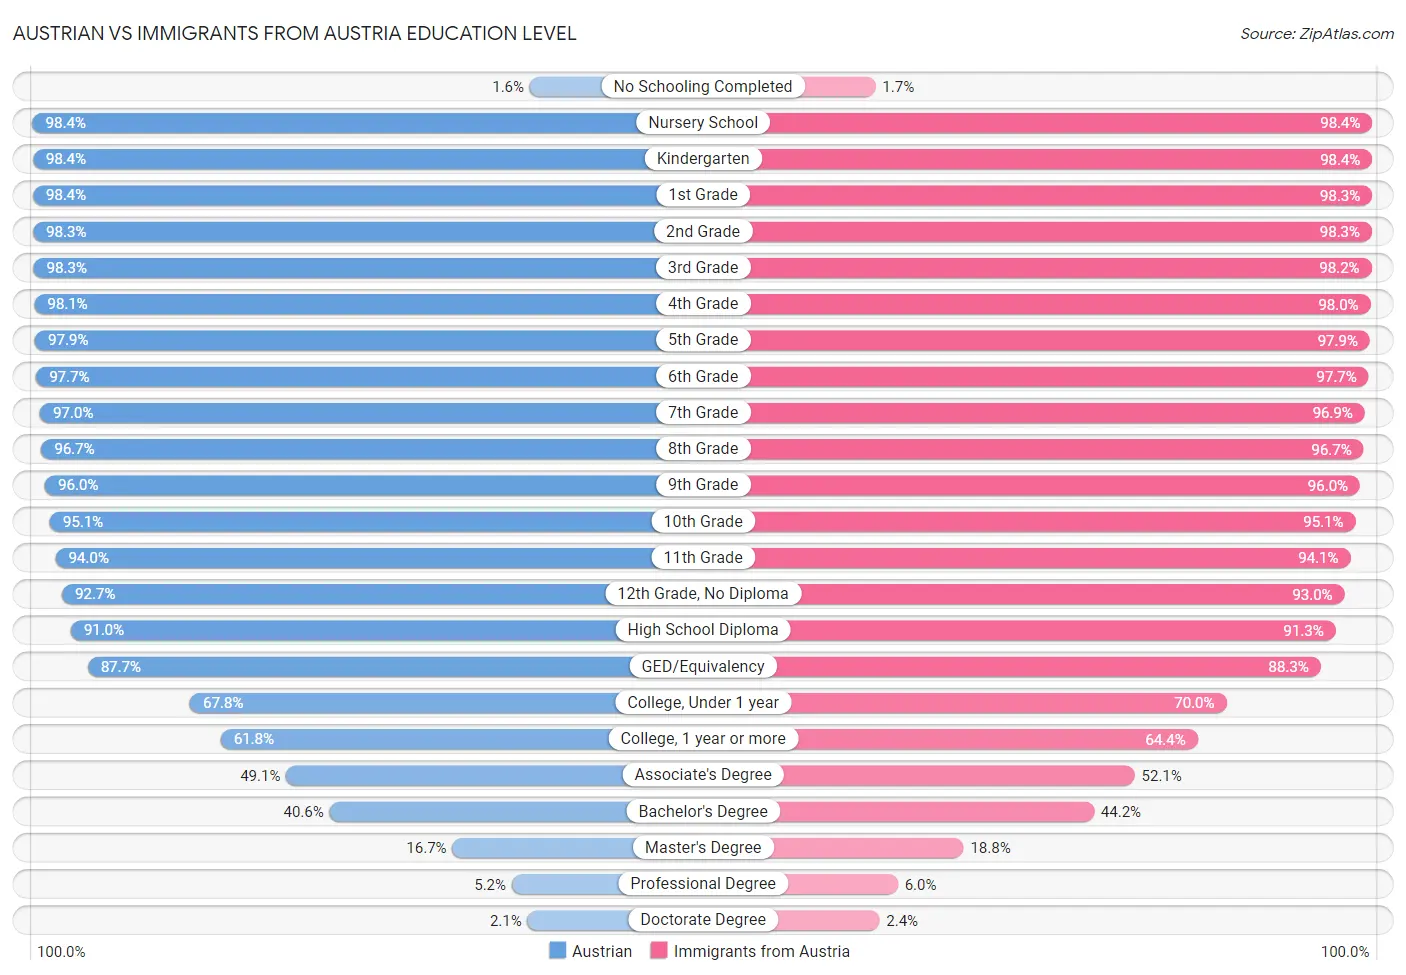 Austrian vs Immigrants from Austria Education Level